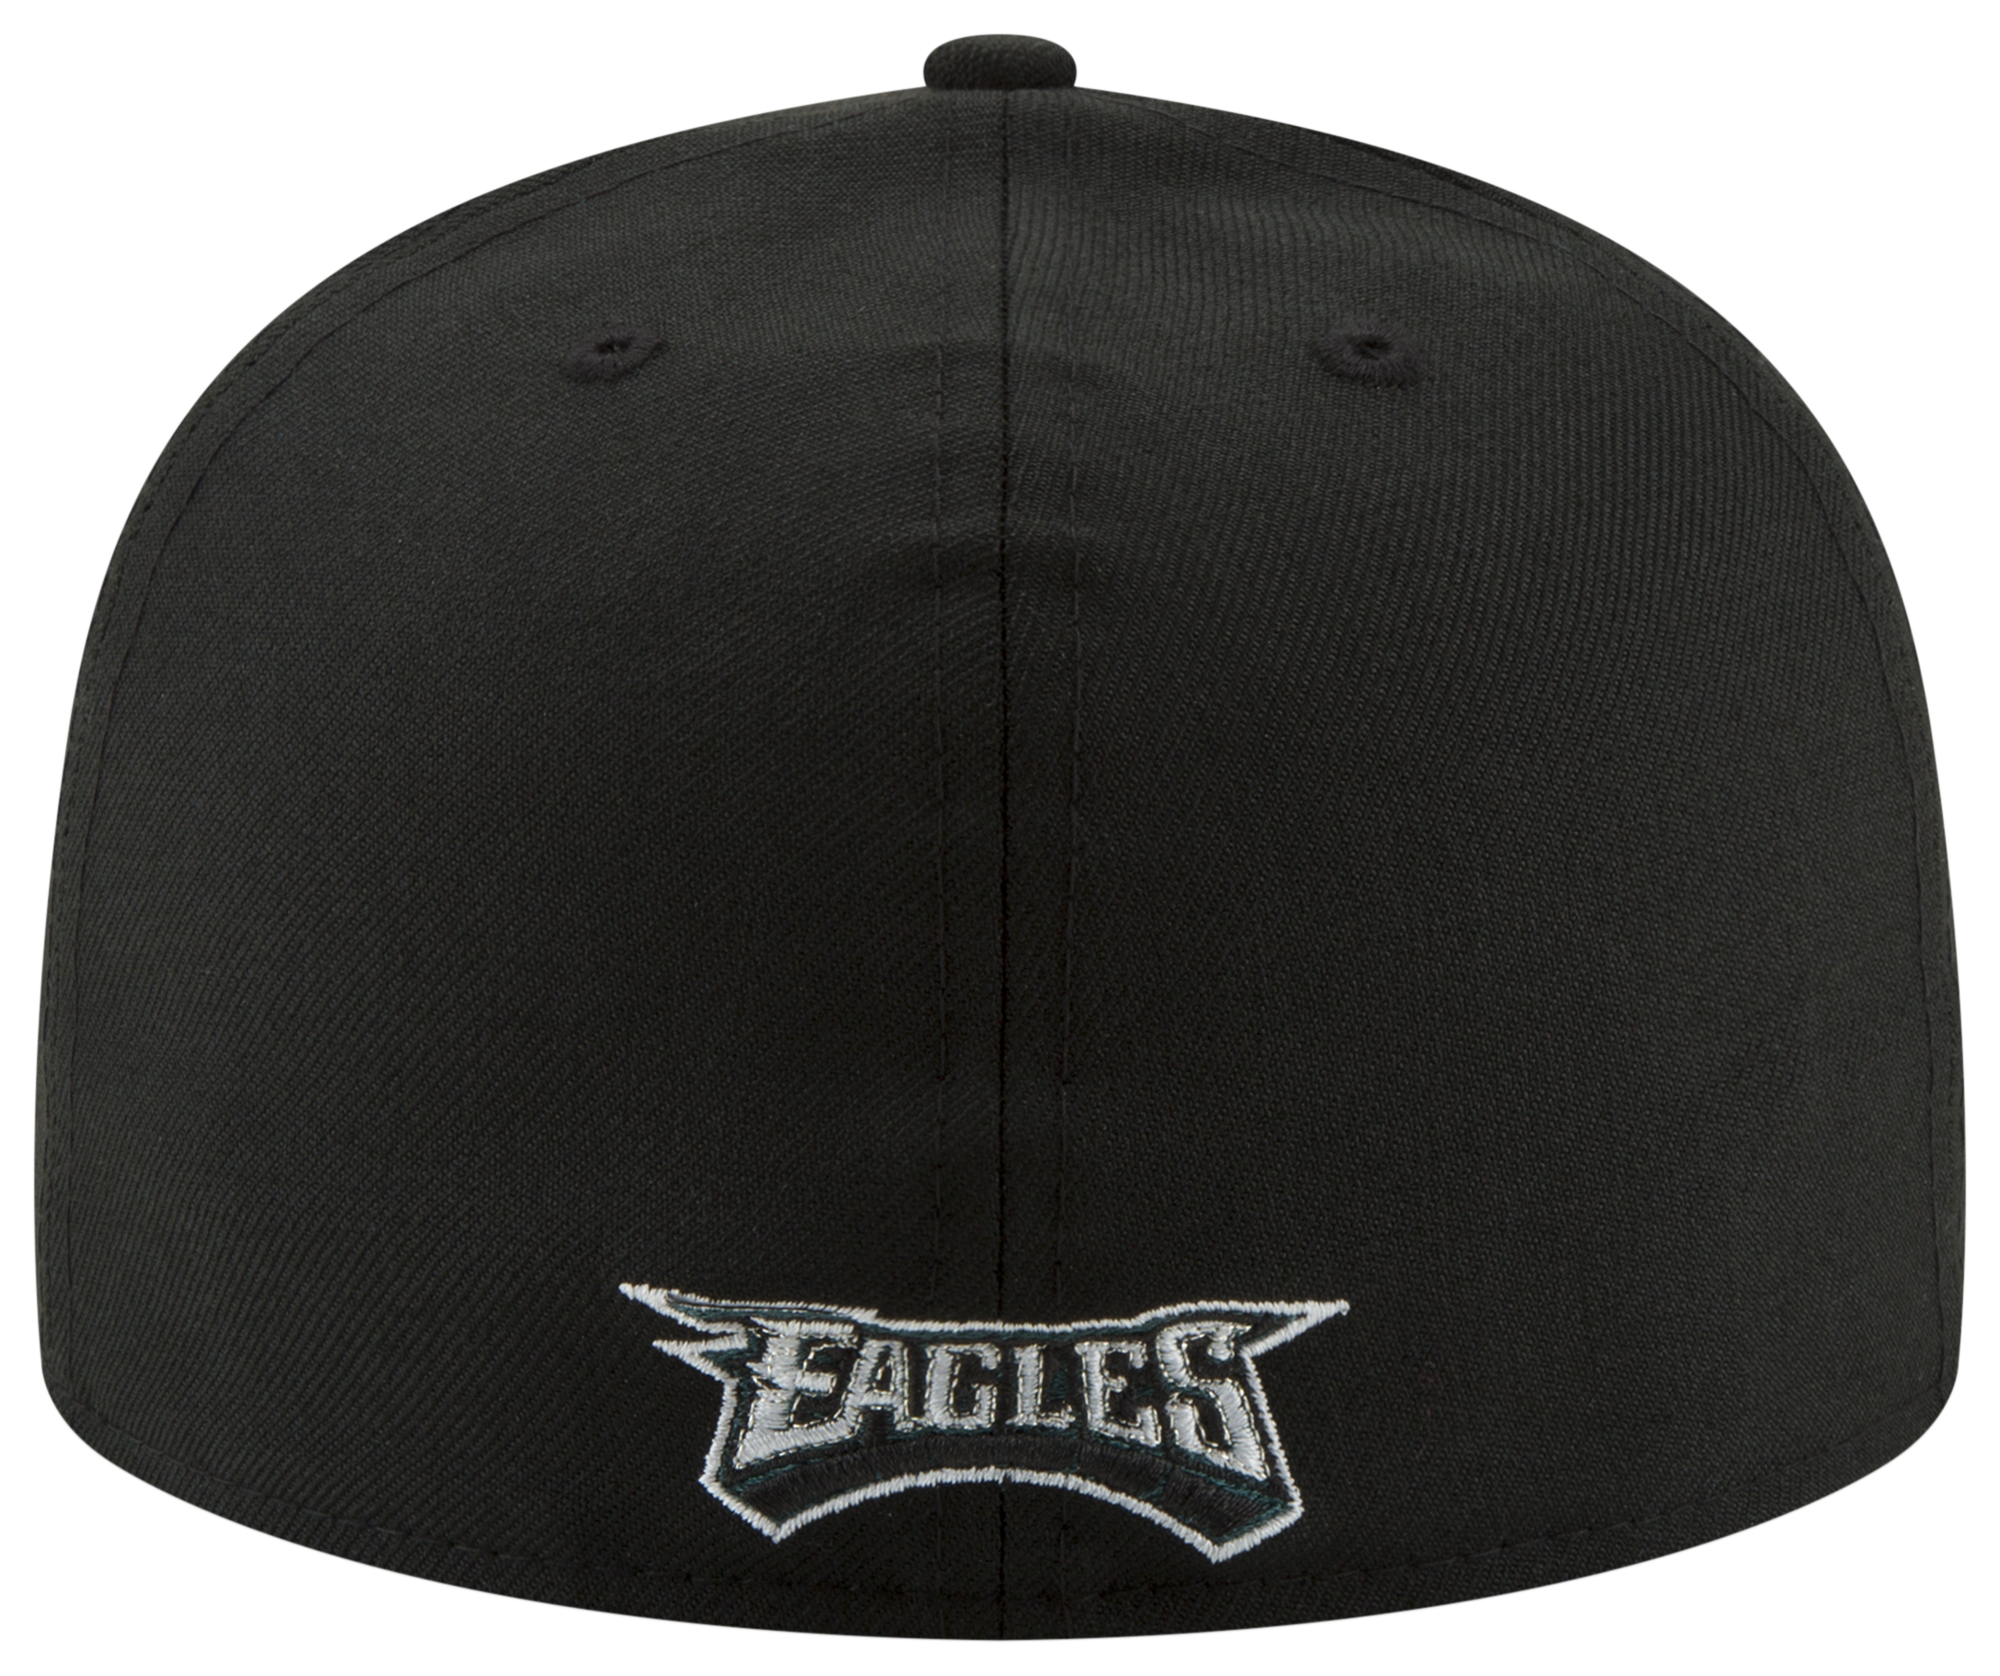 New Era Eagles 5950 T/C Fitted Cap